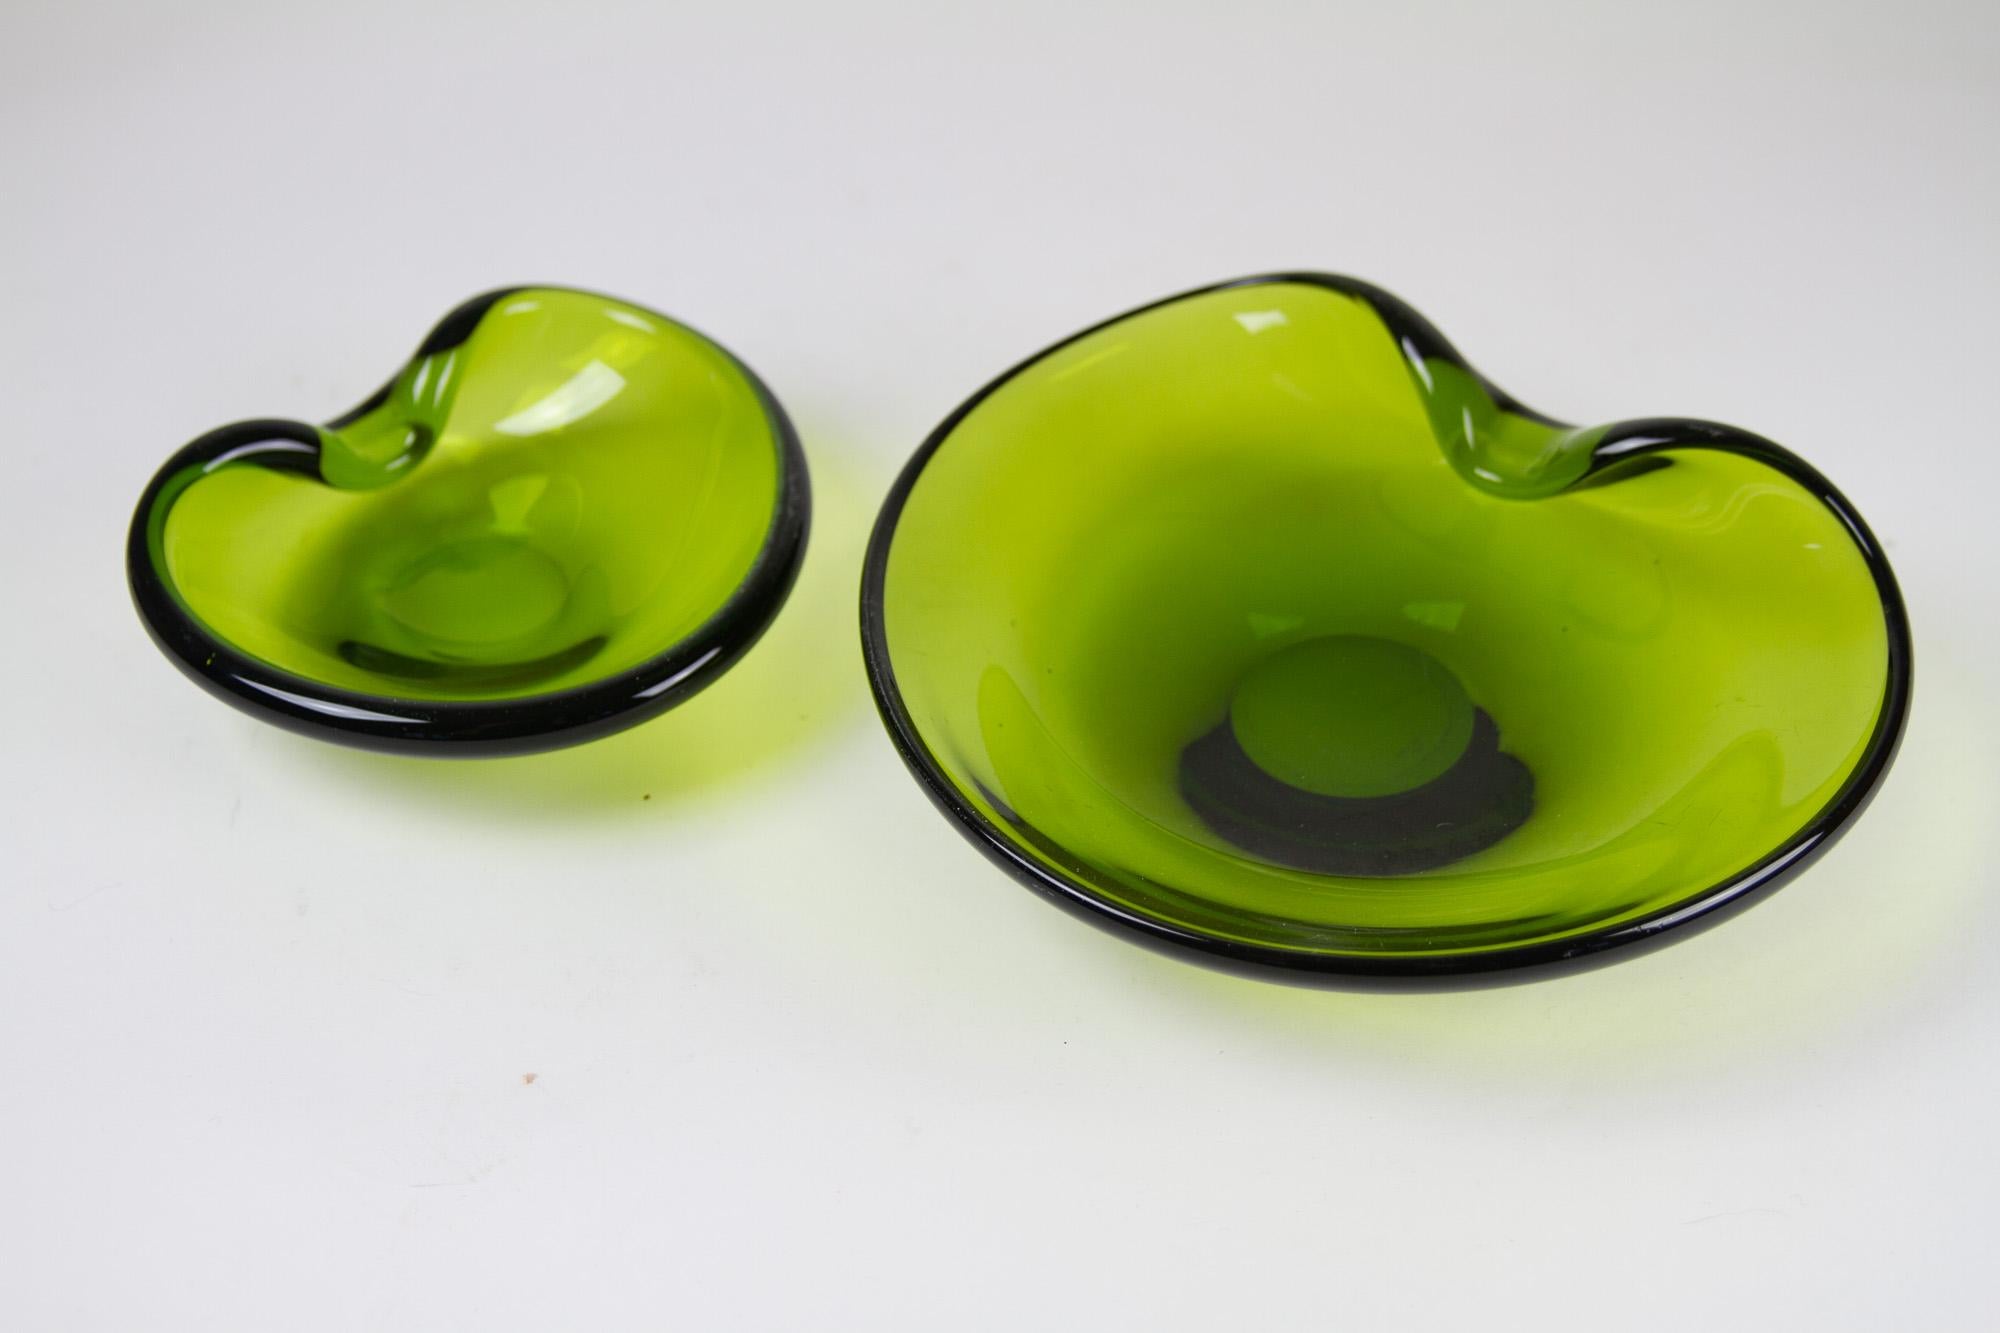 Vintage Danish Pair of Maygreen Glass Bowls by Per Lütken, 1950s, Set of 2 For Sale 4